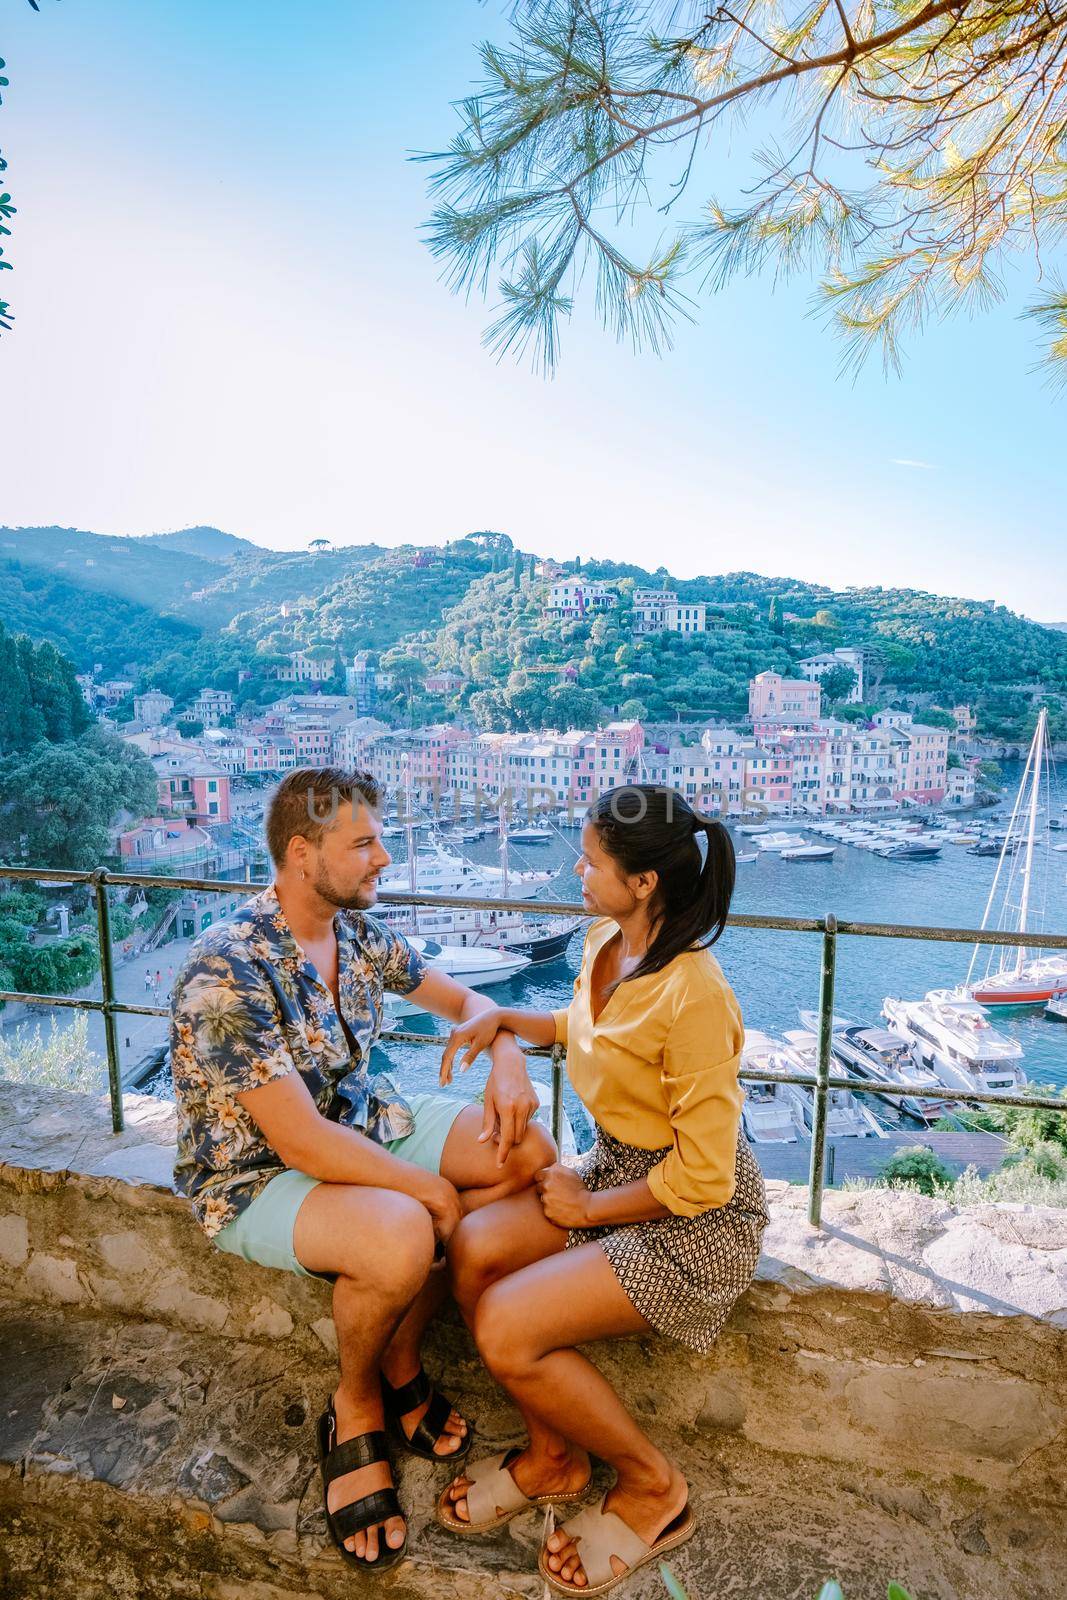 couple on vacation ligurian coast Italy, Portofino famous village bay, Italy colorful village Ligurian coast by fokkebok